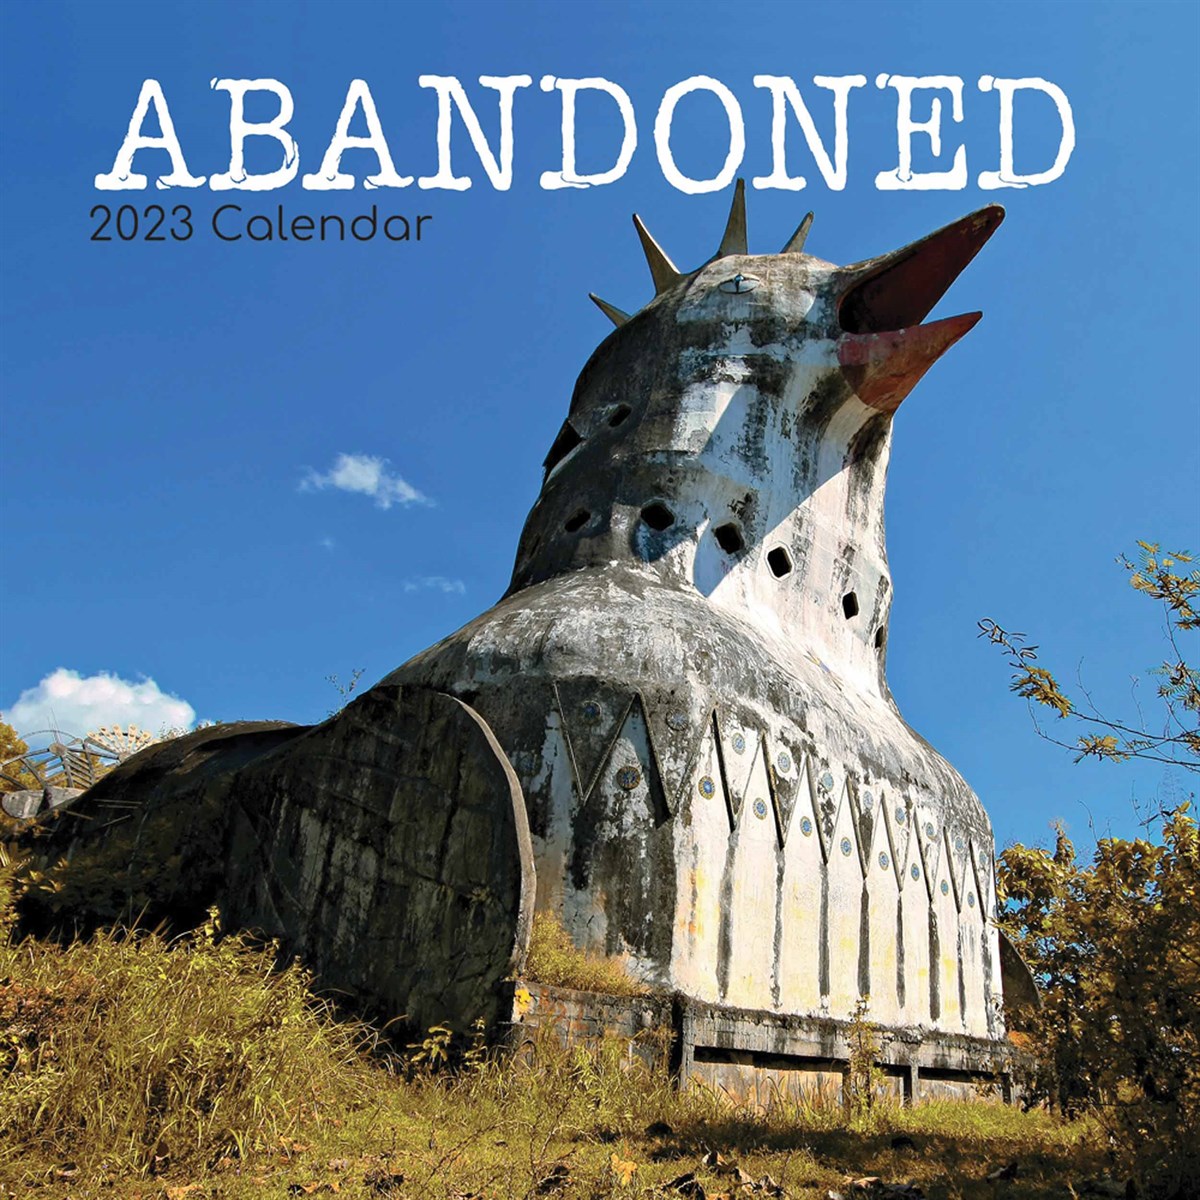 Abandoned 2023 Calendars